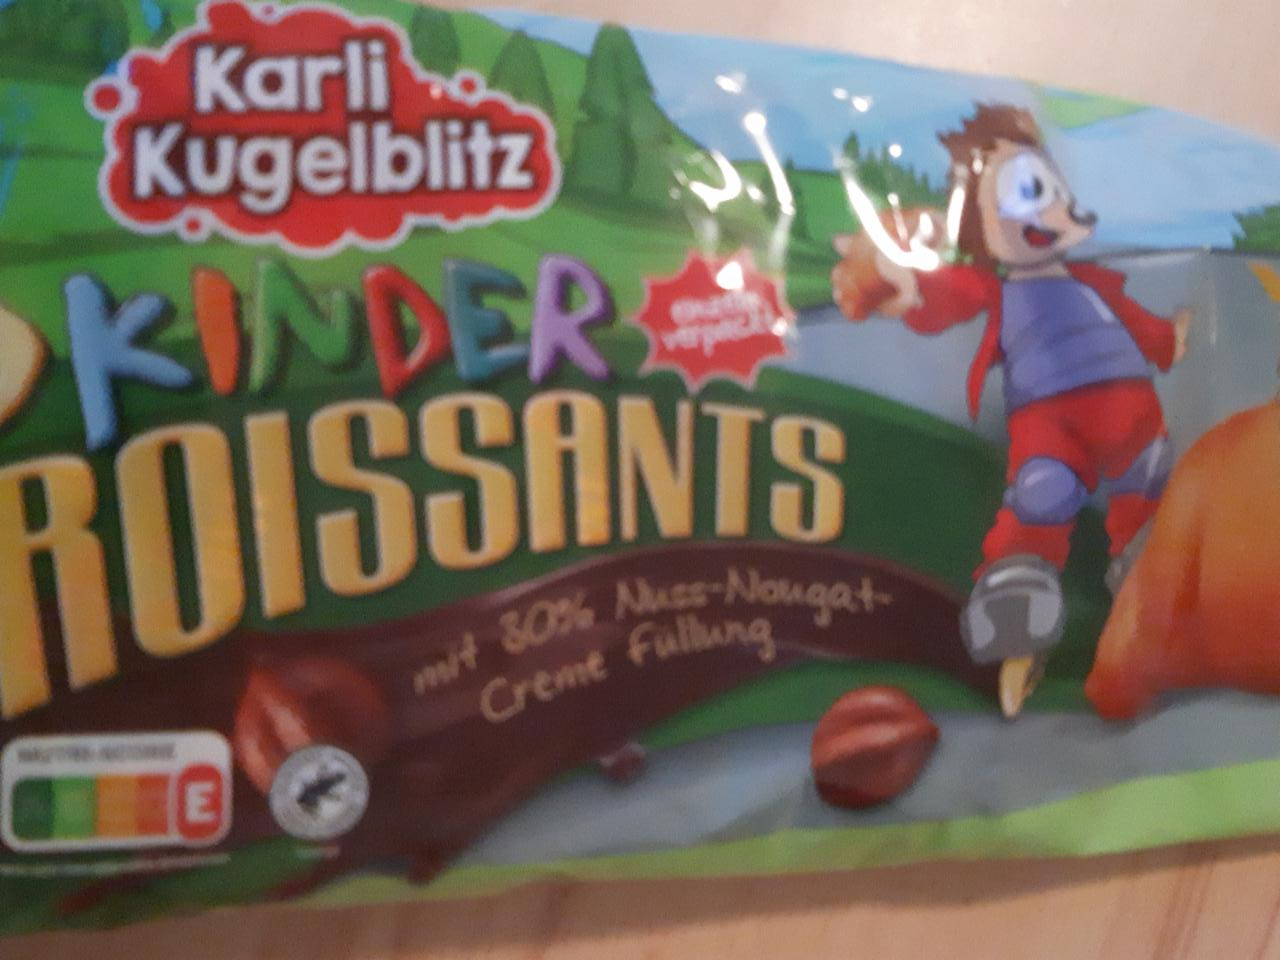 Fotografie - 5 Kinder Croissants mit 30% Nuss-Nougat Creme füllung Karlis Kinder